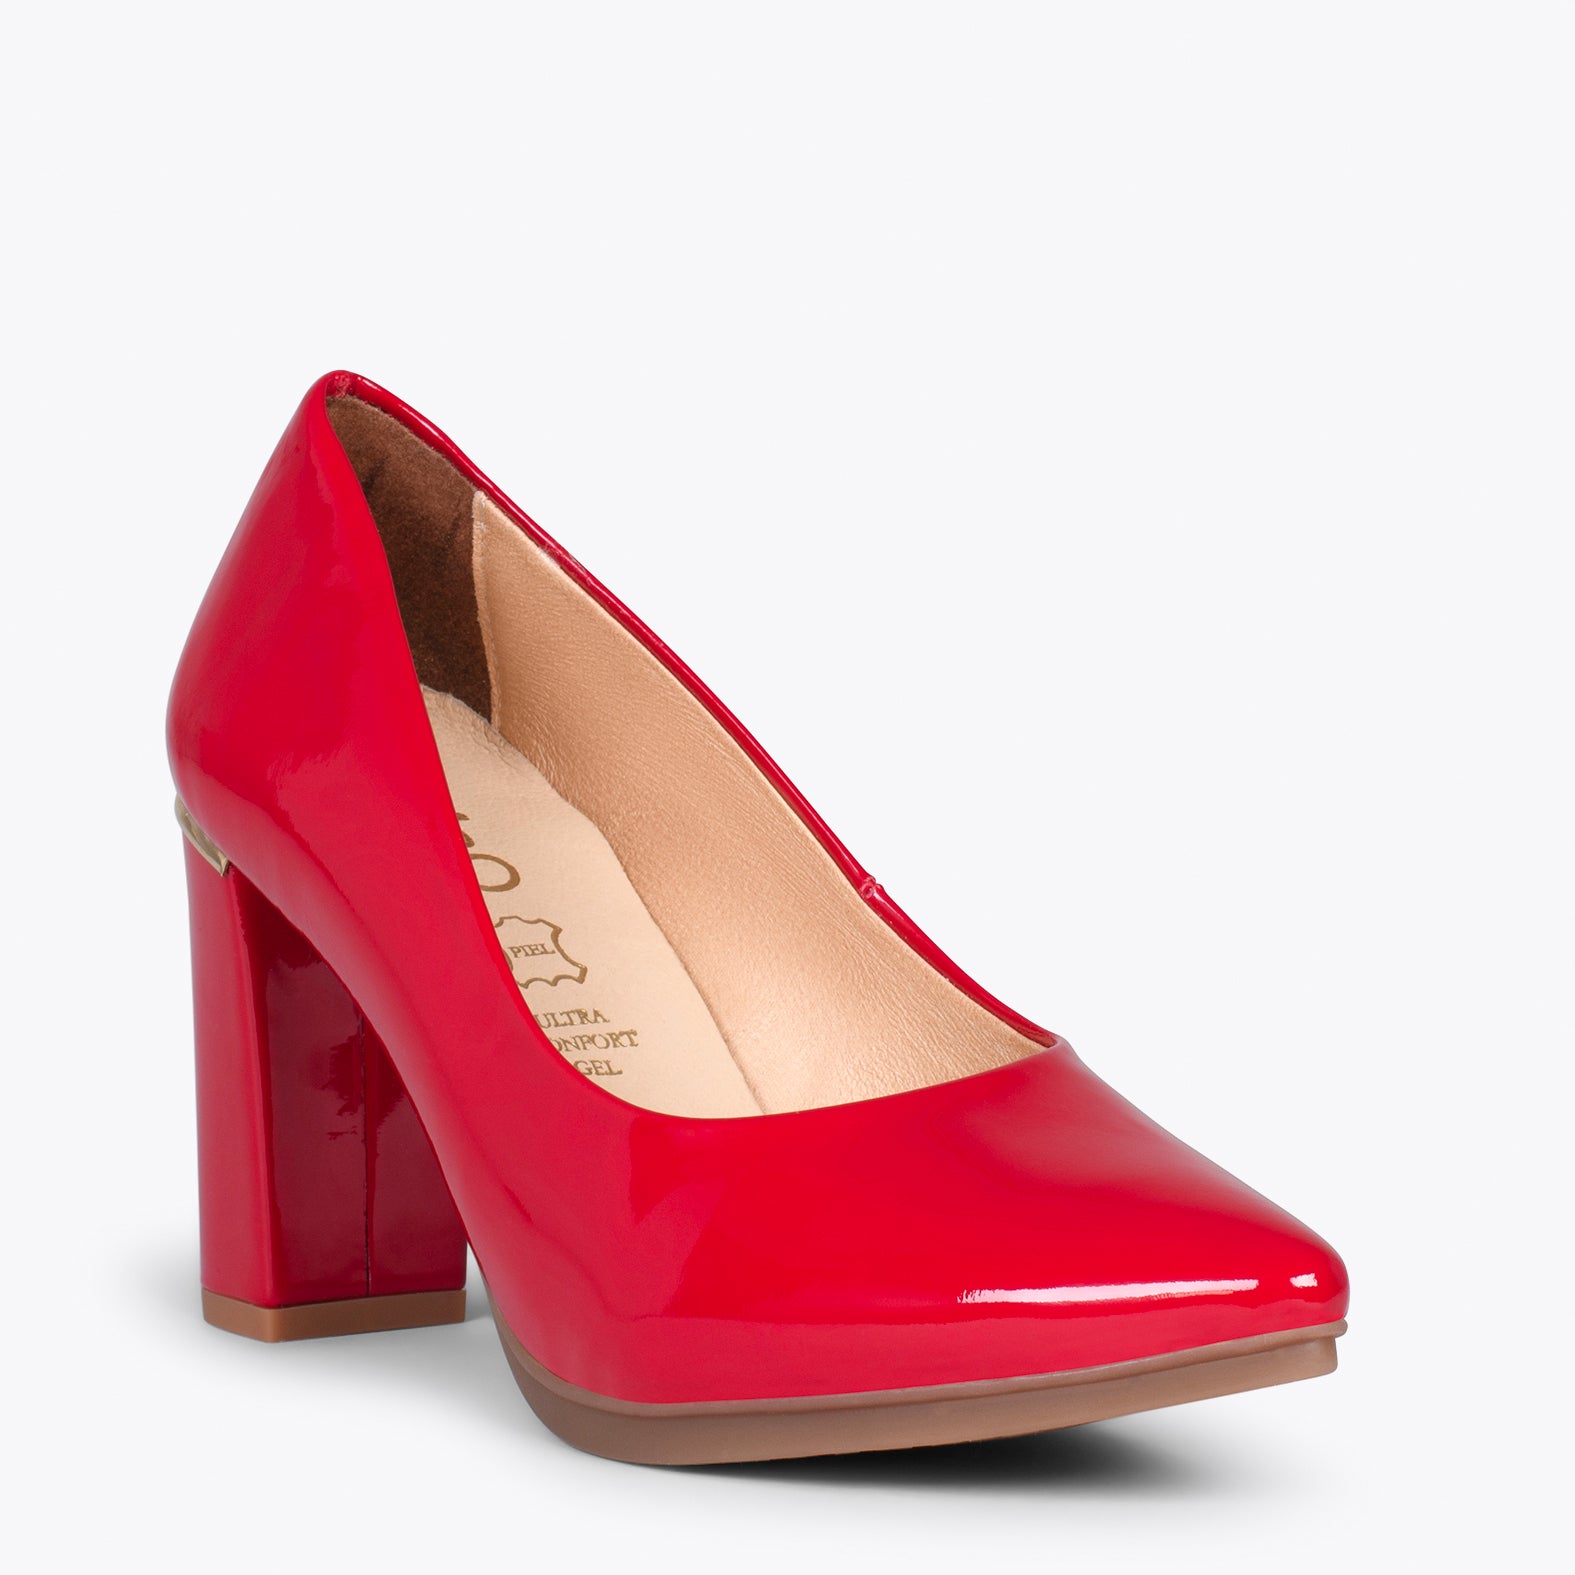 URBAN PATENT – RED patent high heels